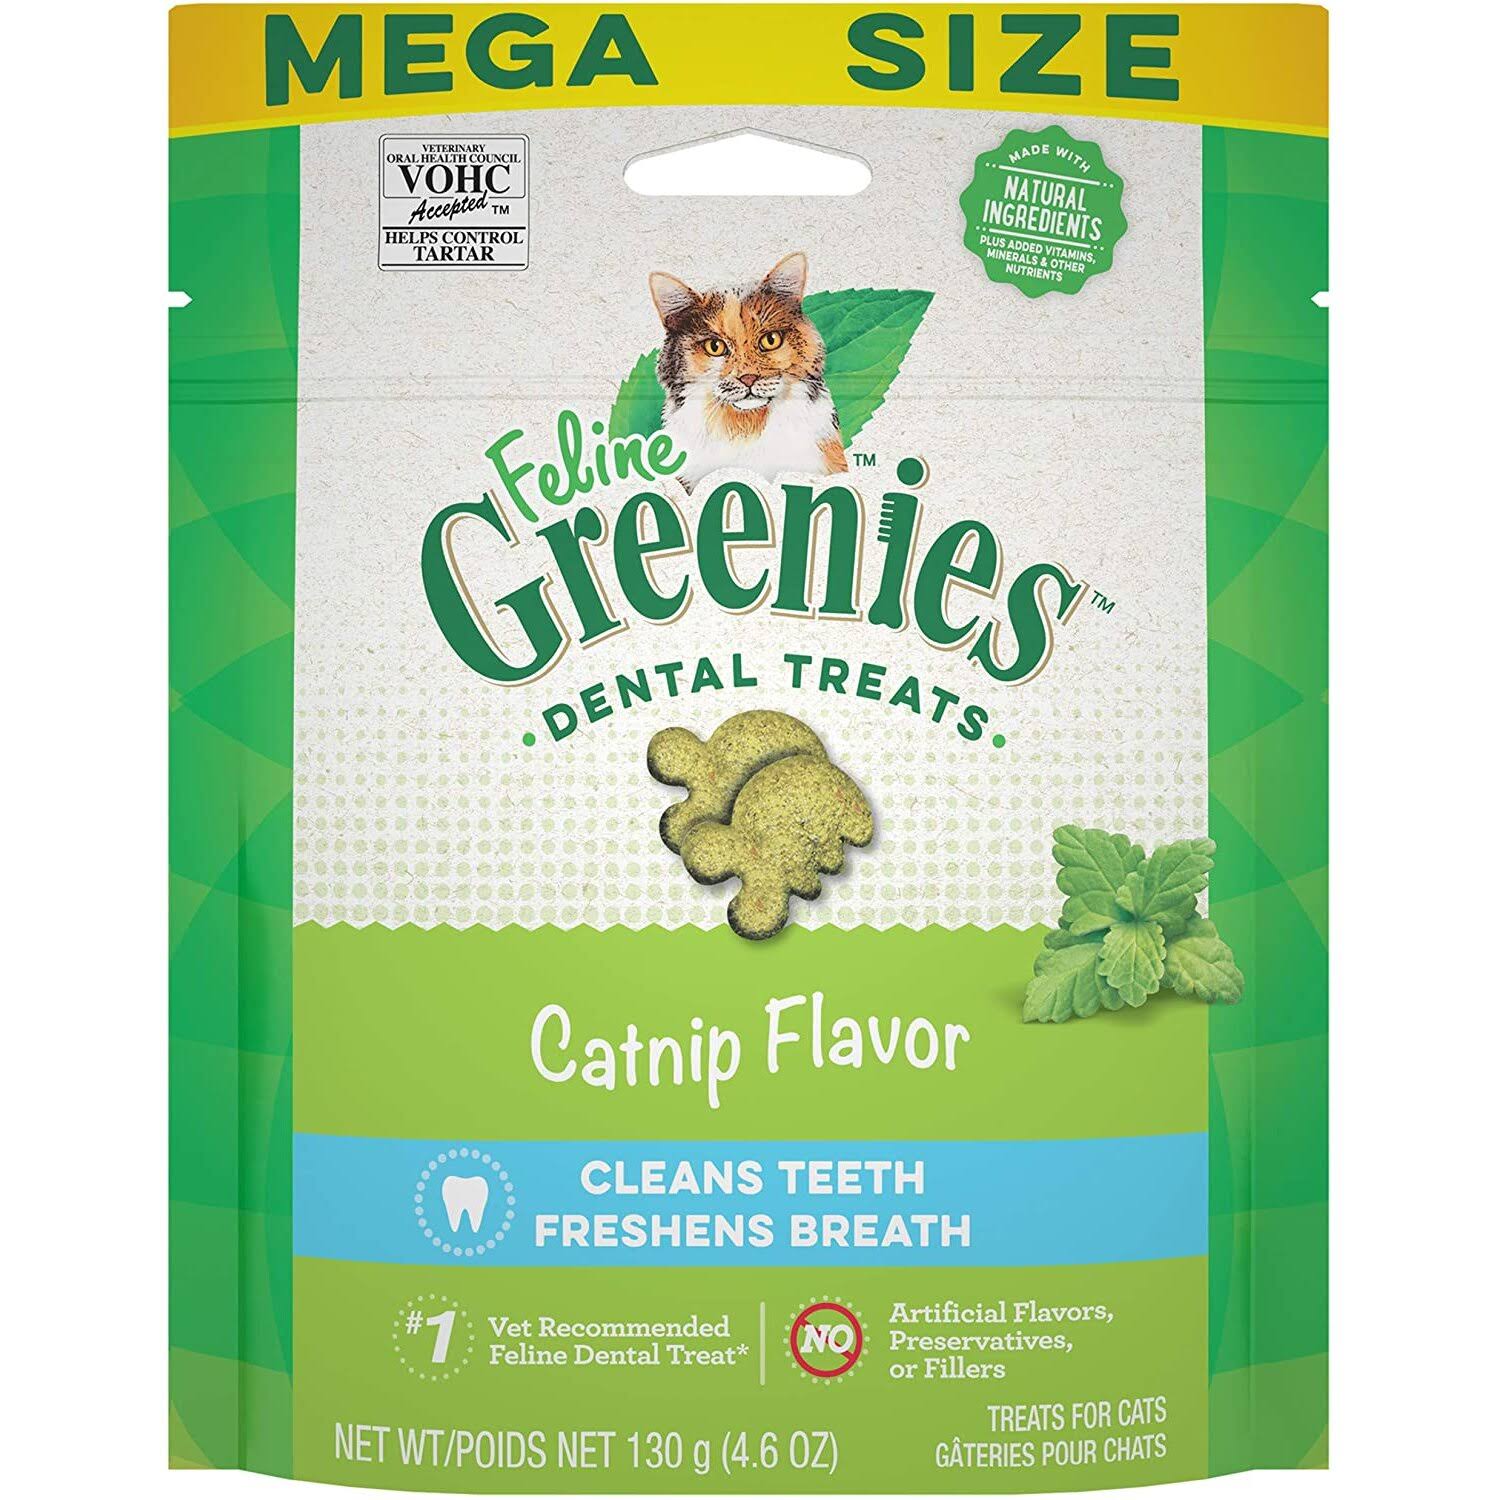 Greenies Feline Crunchy Dental Treats Catnip Flavor Mega Size 4.06 ounces